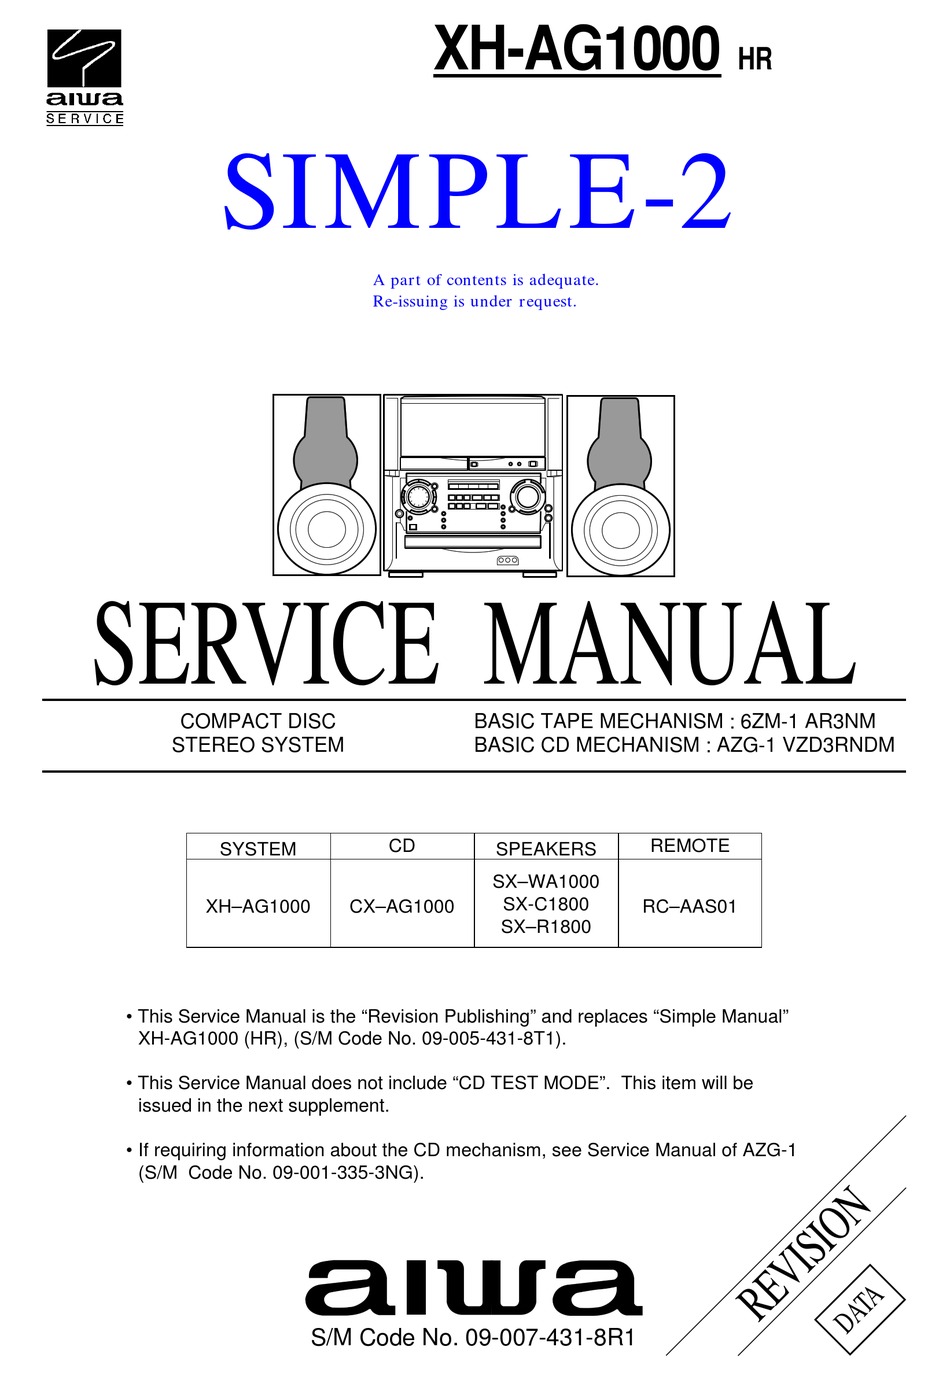 Aiwa Simple 2 Xh Ag1000 Hr Service Manual Pdf Download Manualslib